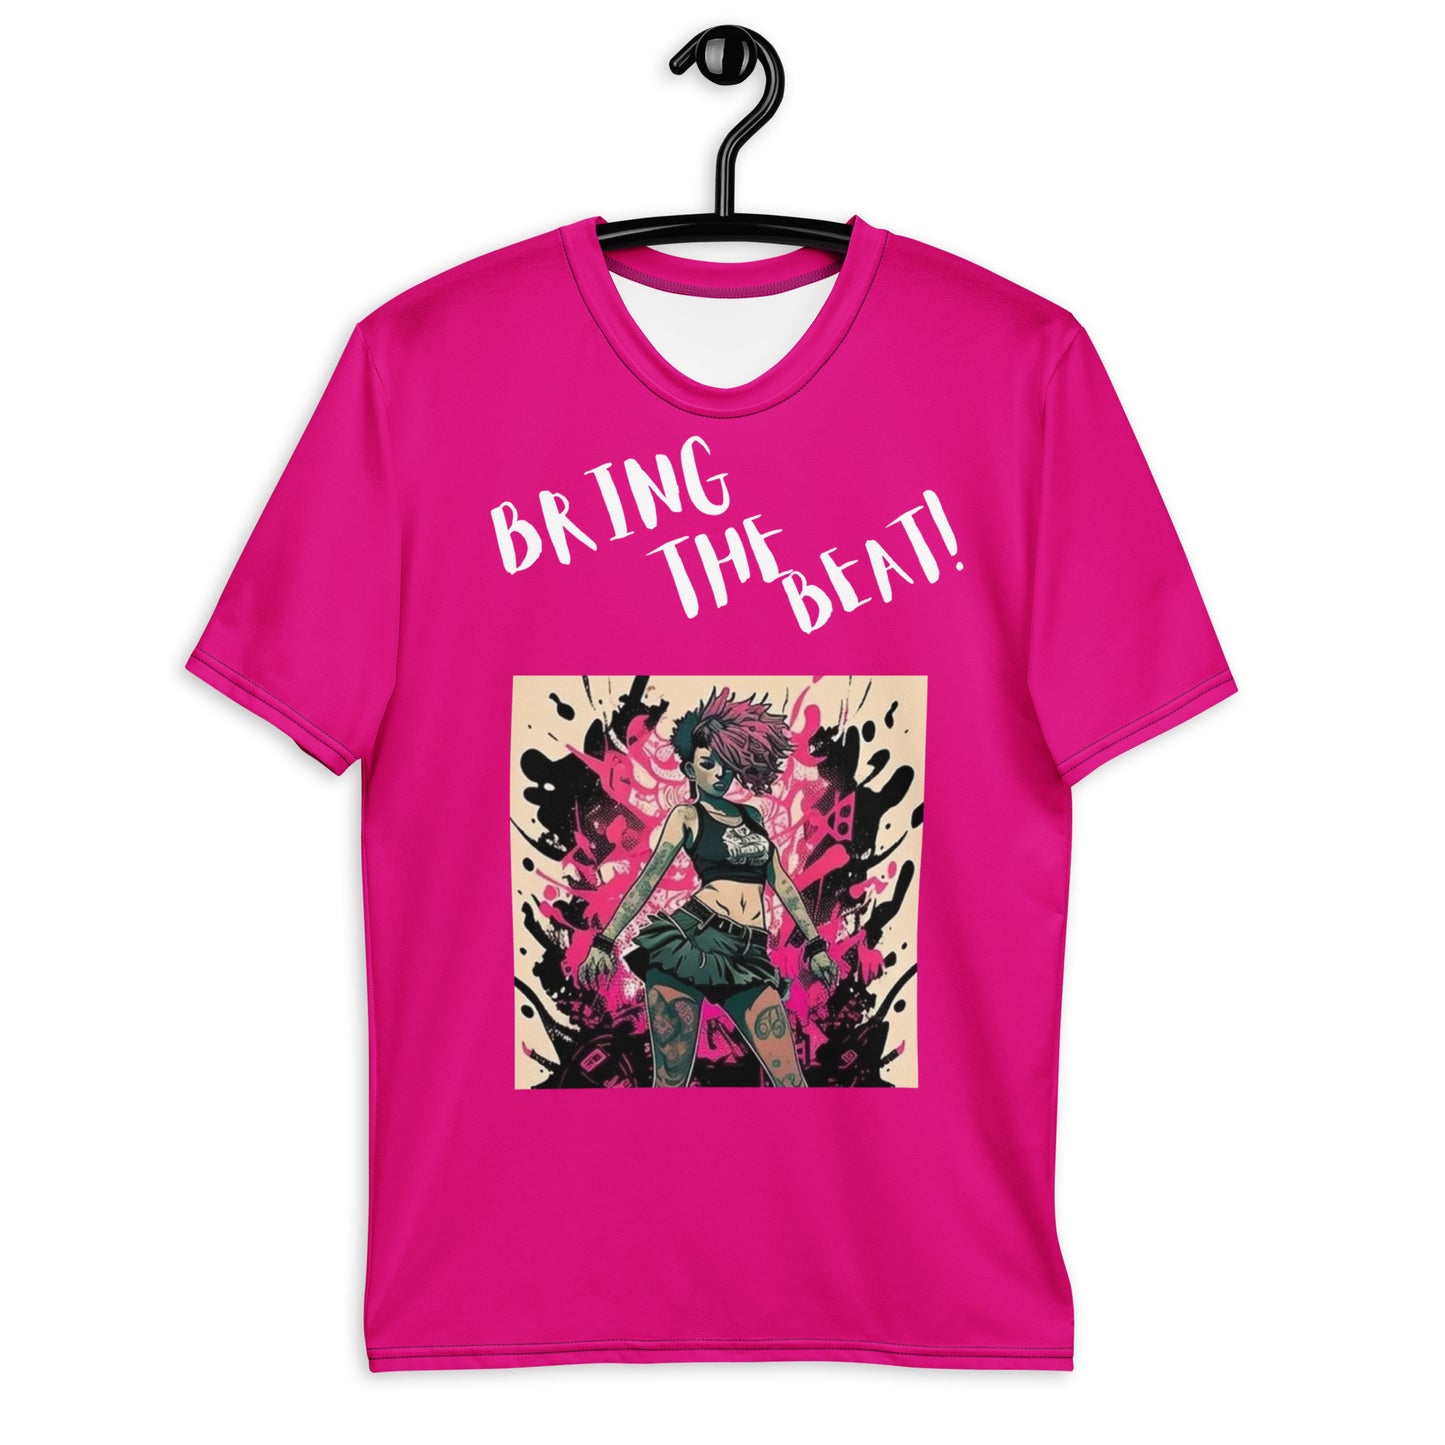 Bring The Beat T shirt Pink